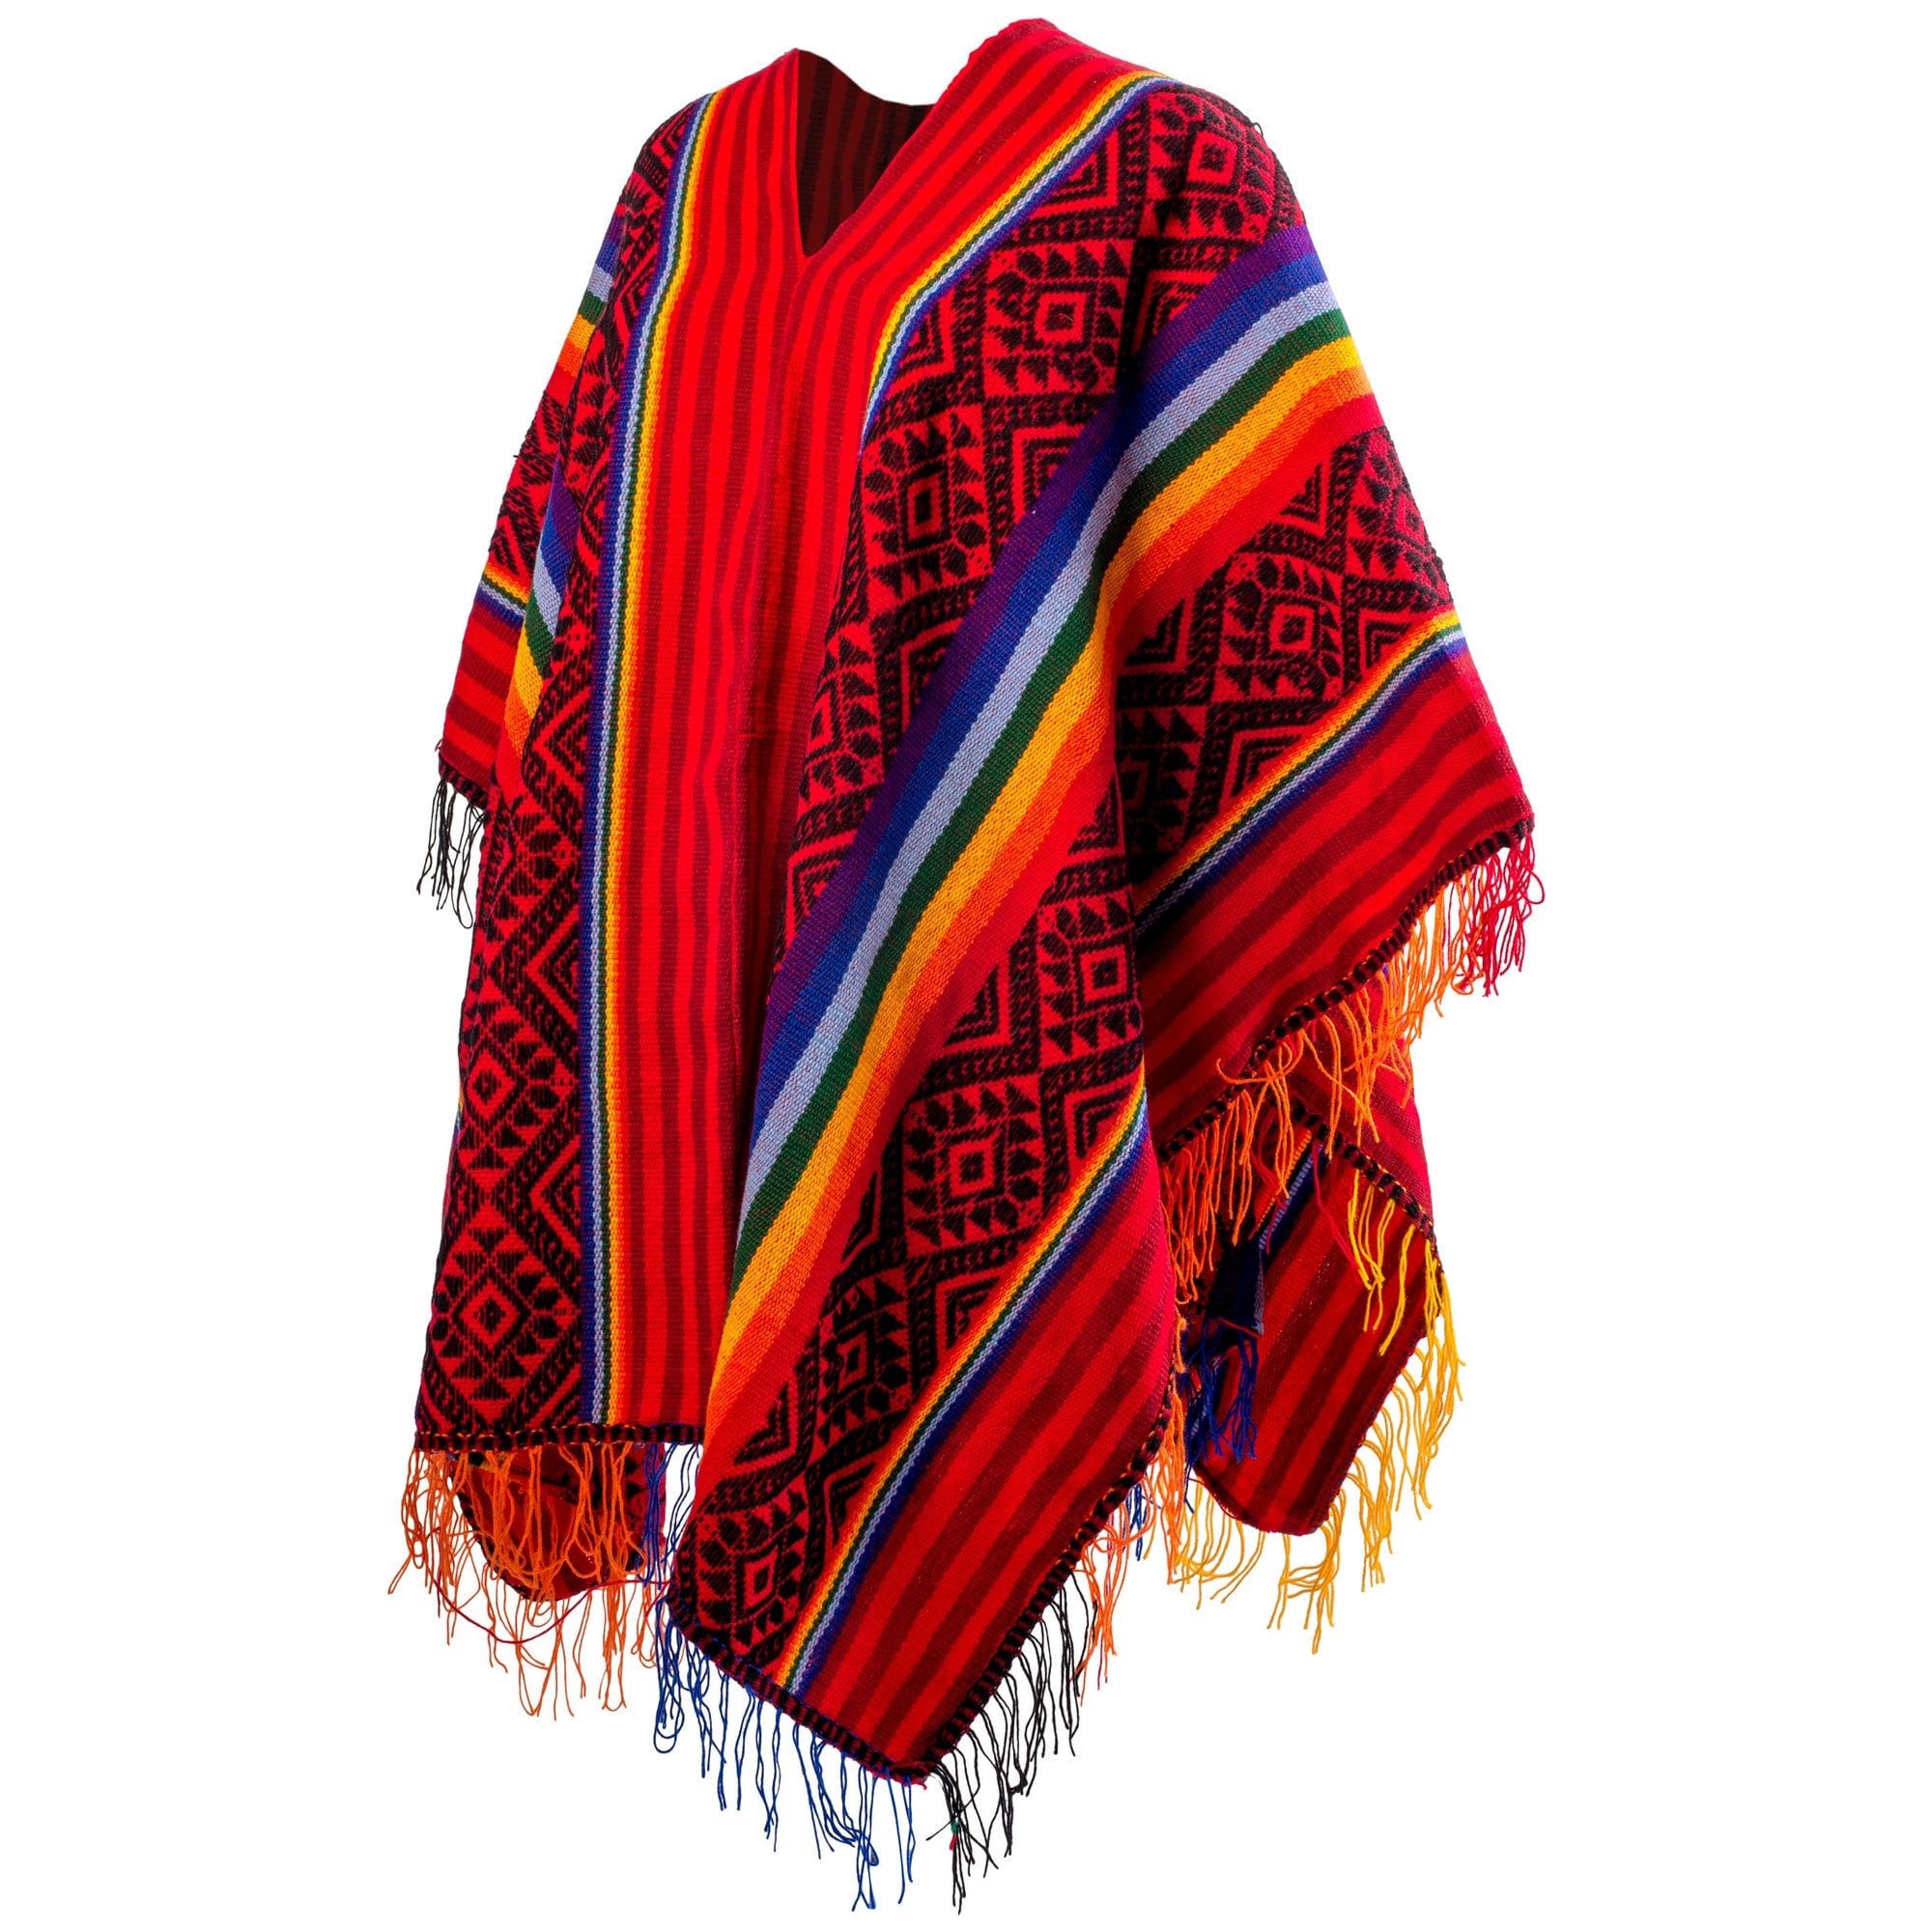 Kleding Gender-neutrale kleding volwassenen Ponchos INKA Q'ERO PONCHO authentieke unisex sjamanistische ceremoniële outfit Andes Cuzco Peruaanse rode kleurrijke cape met franje 